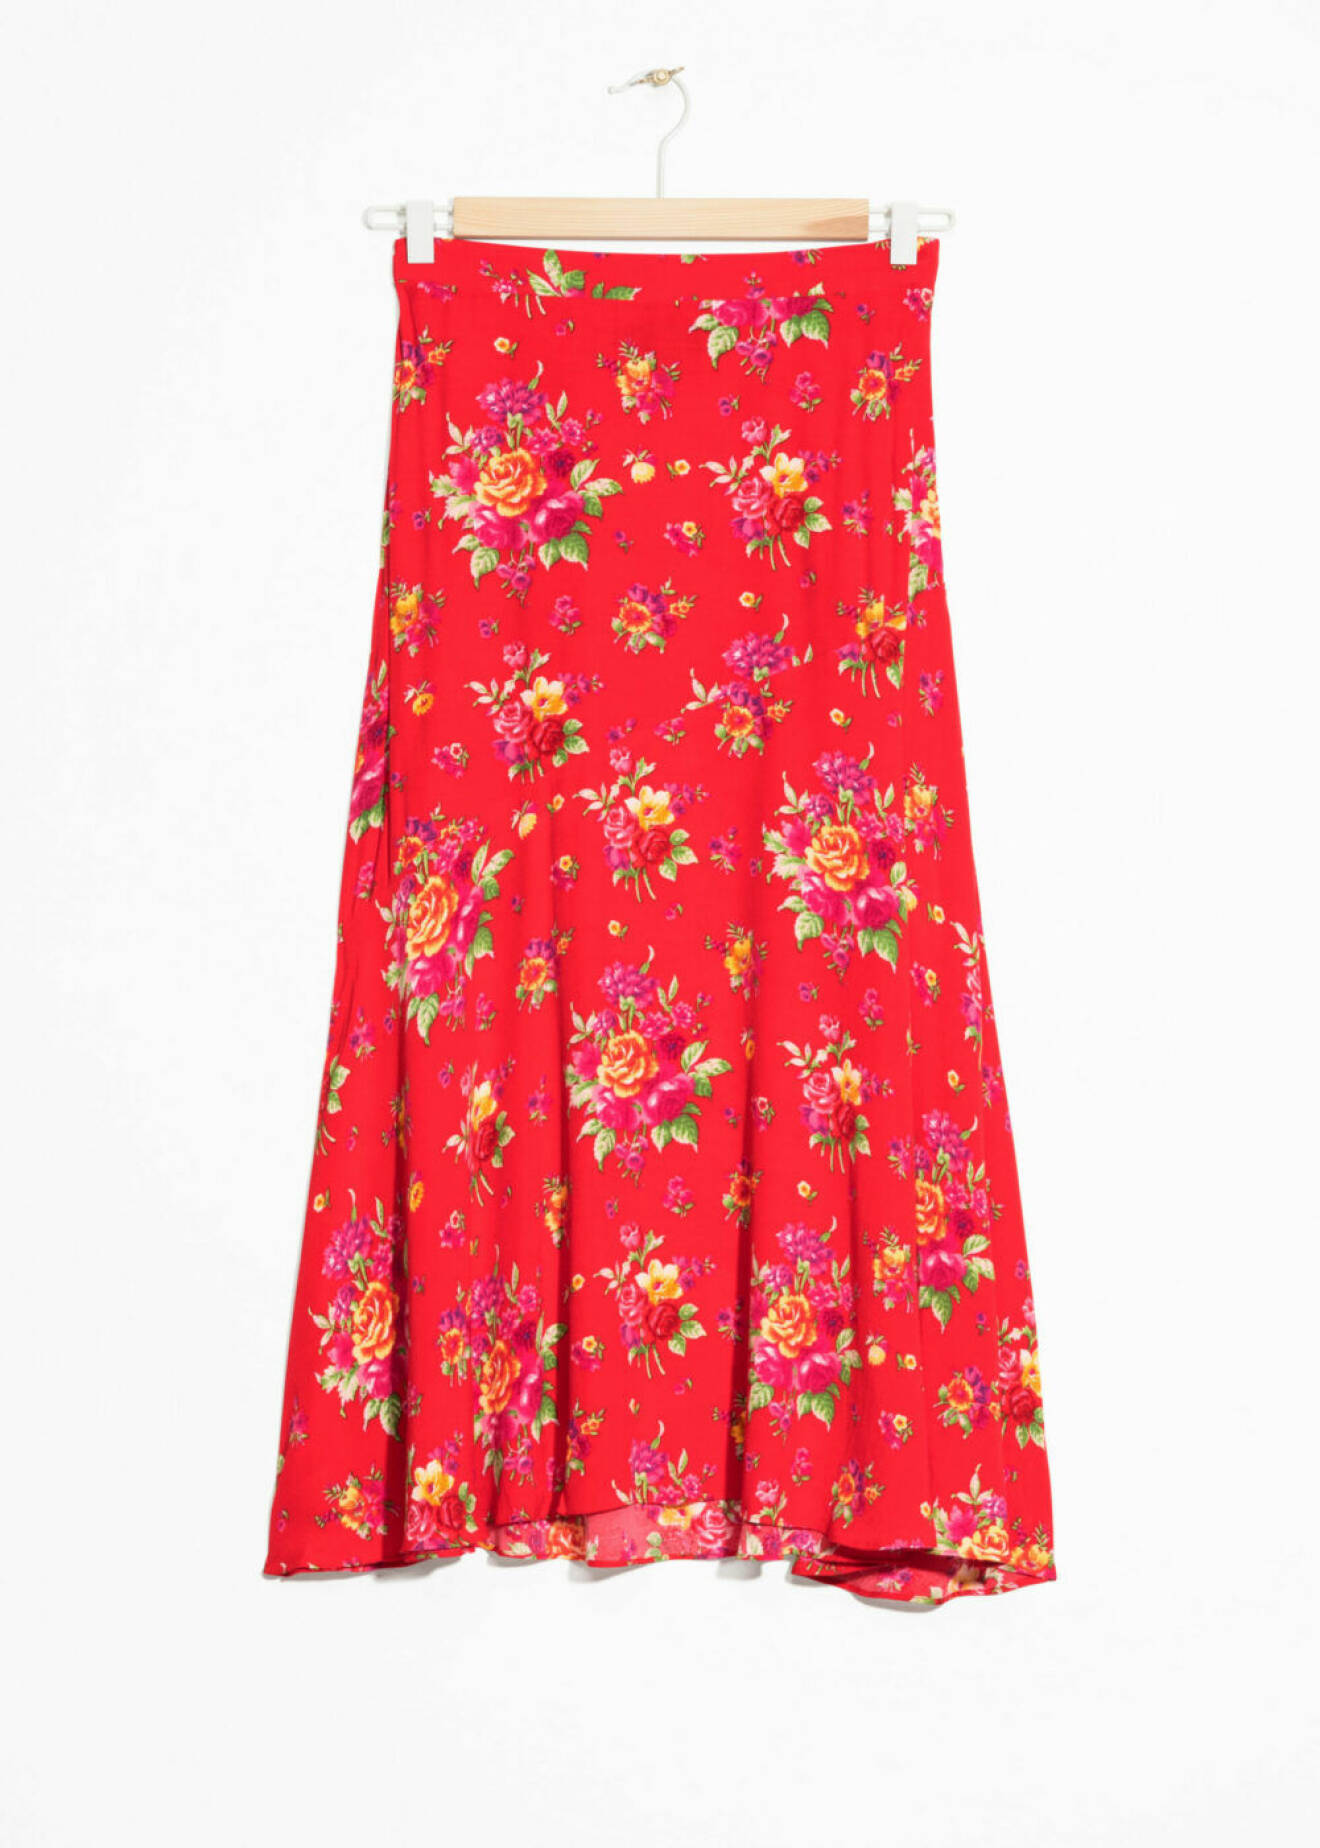 Blommig röd kjol